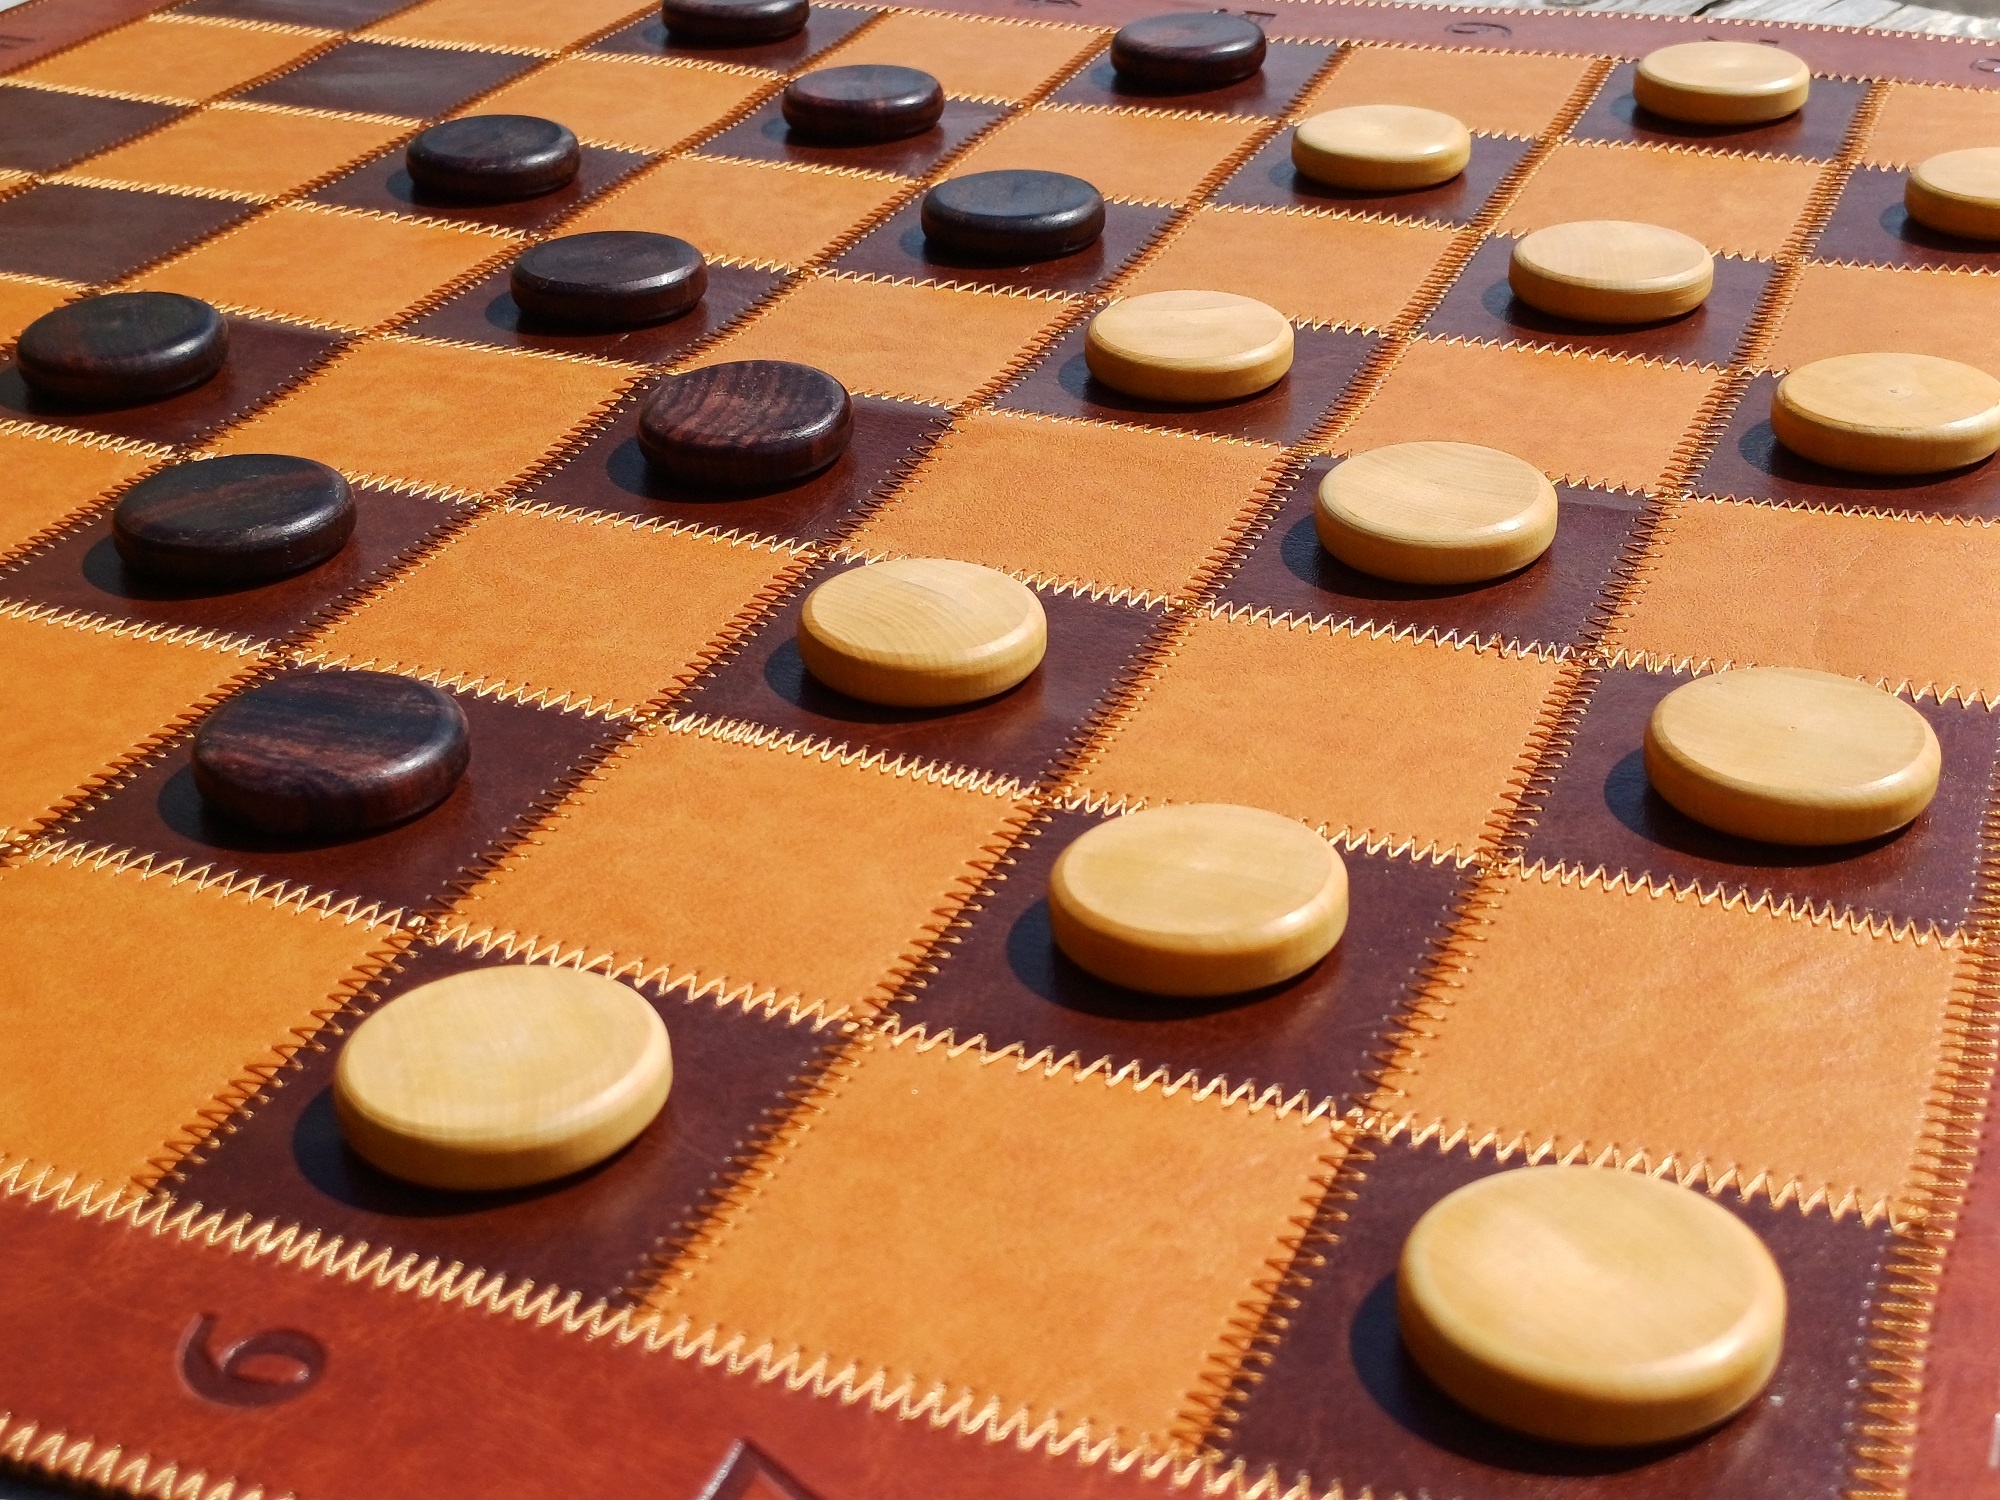 theme and staunton chess and backgammon